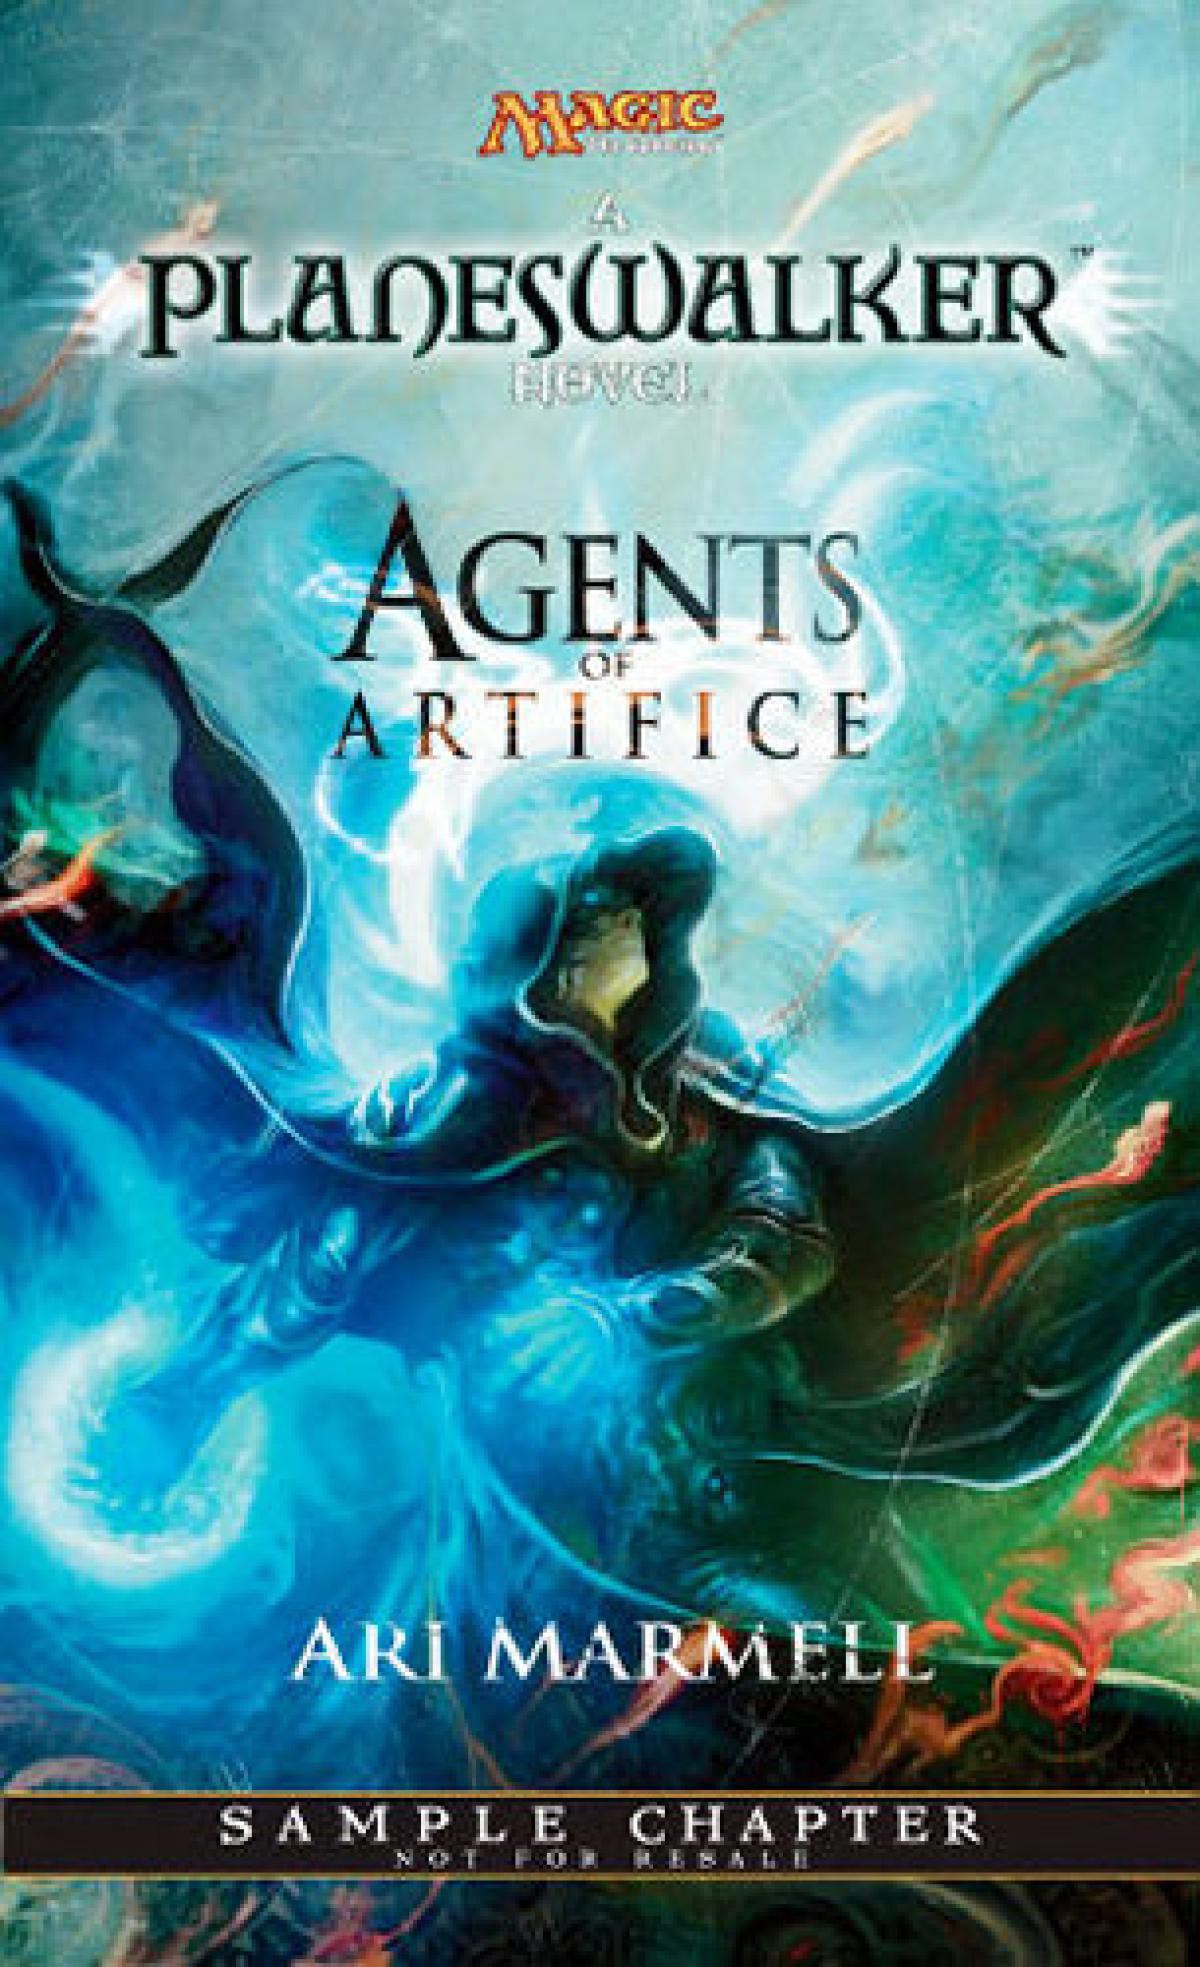 Agents of Artifice: A Planeswalker Novel